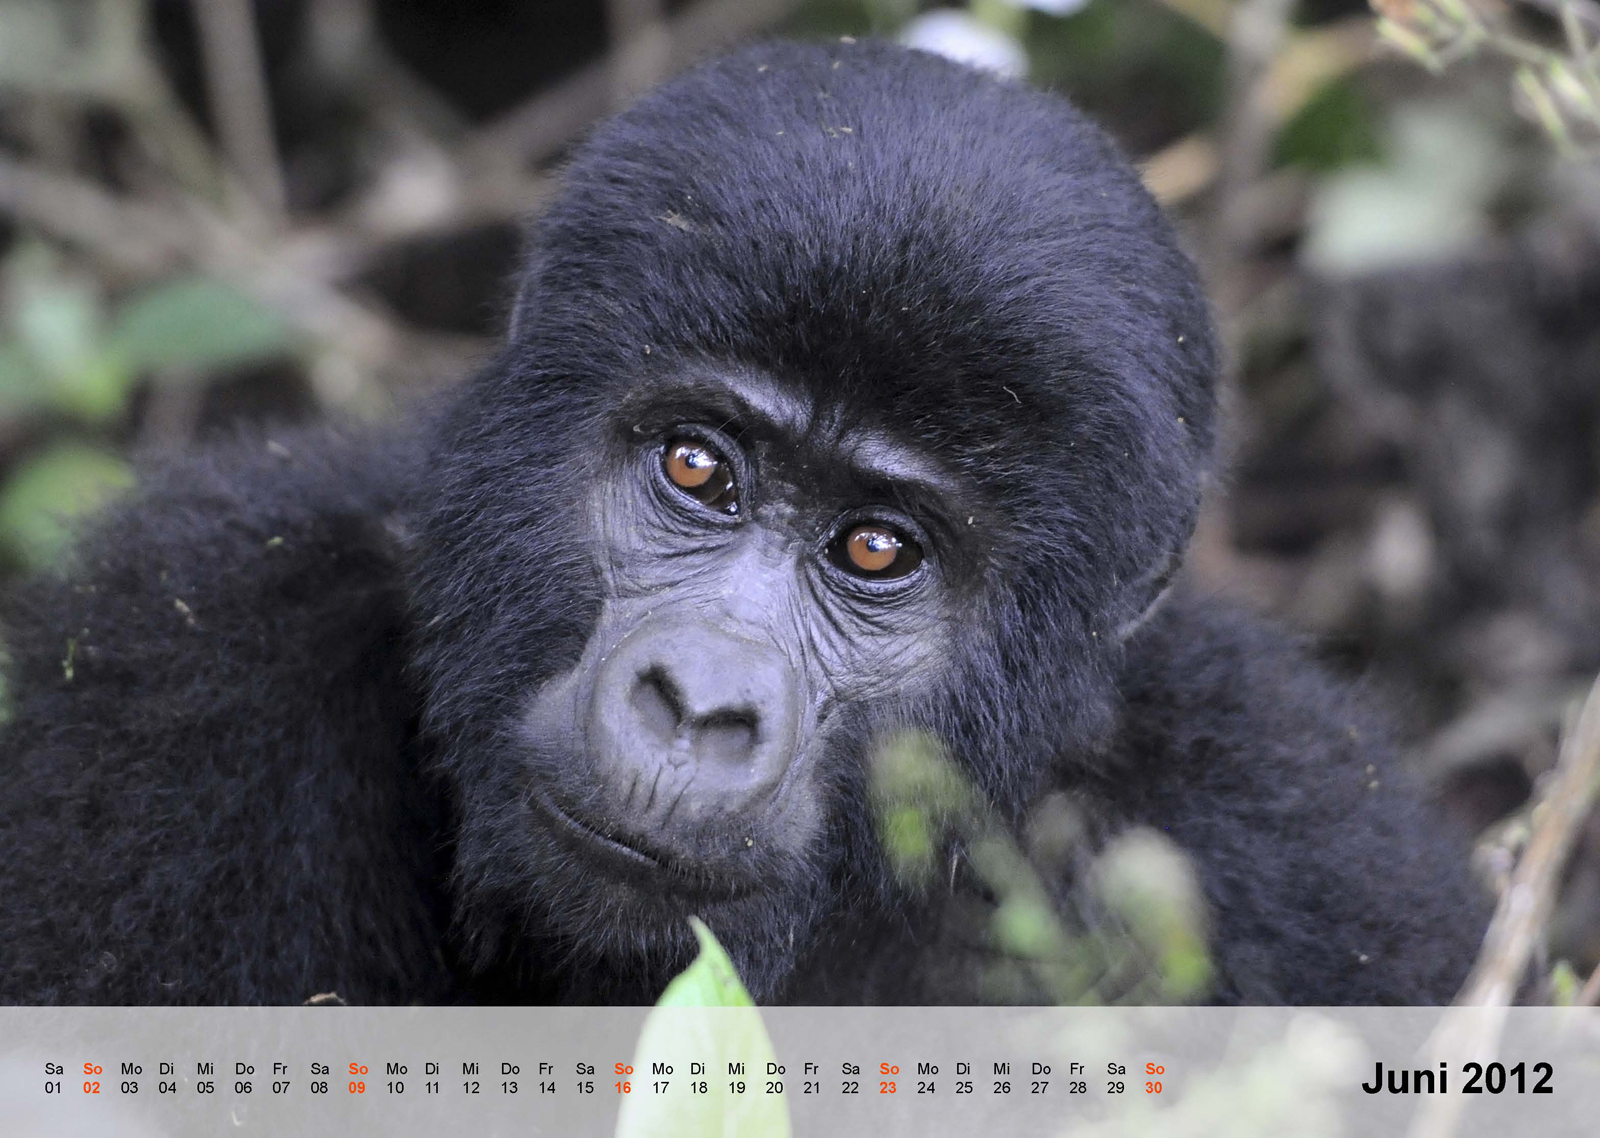 Berggorilla | Mountain gorilla | Bwindi Impenetrable National Park | Uganda - Kalender 2012 - Juni